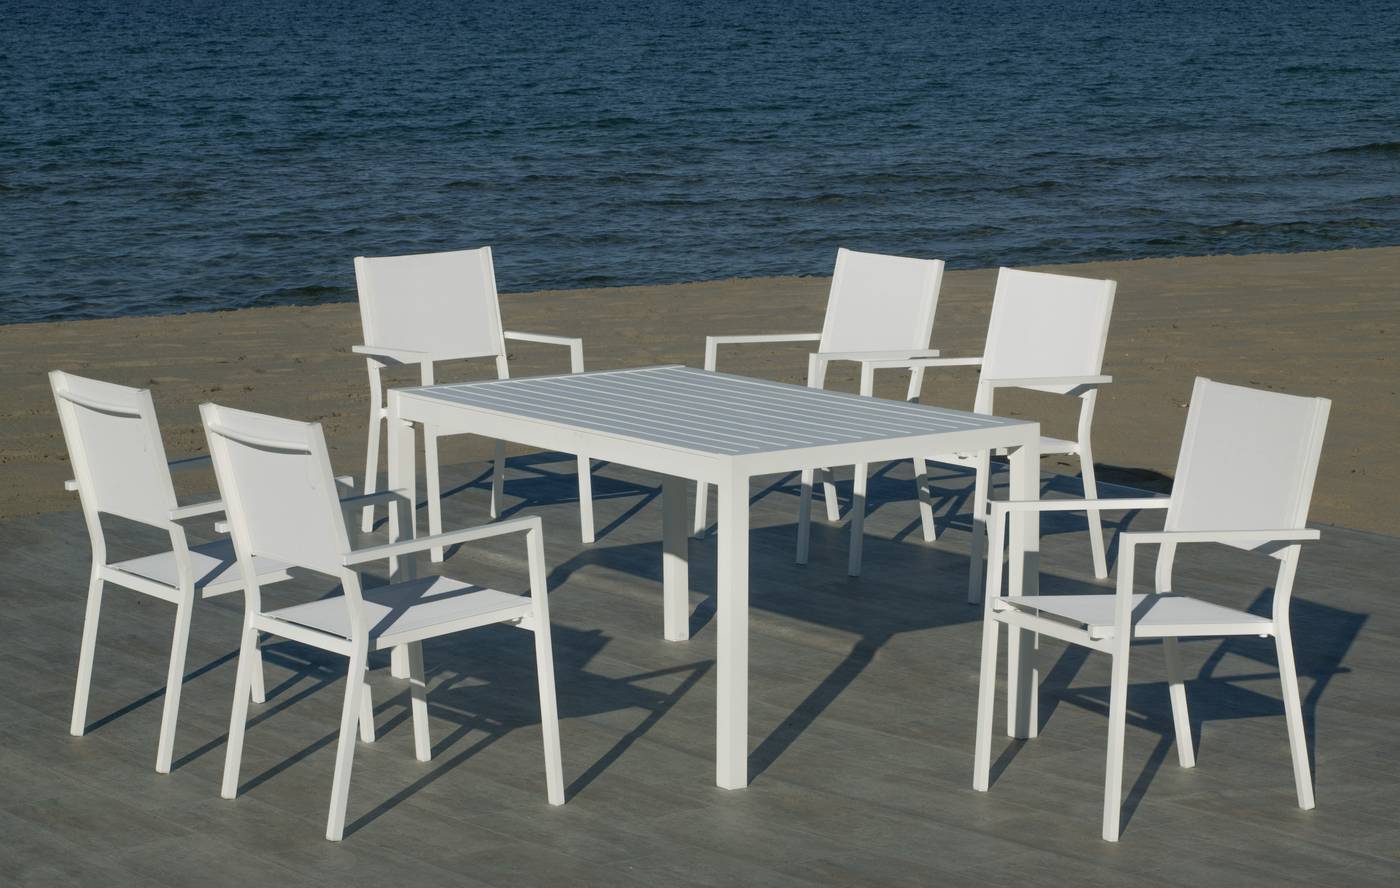 Conjunto de aluminio: Mesa de comedor rectangular de 150 cm. + 4 sillones de textilen. Disponible en color blanco, antracita, champagne, plata o marrón.